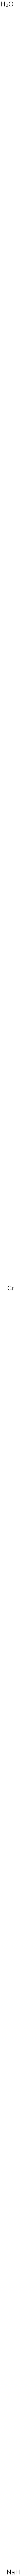 SODIUMCHROMITE|氧化铬钠